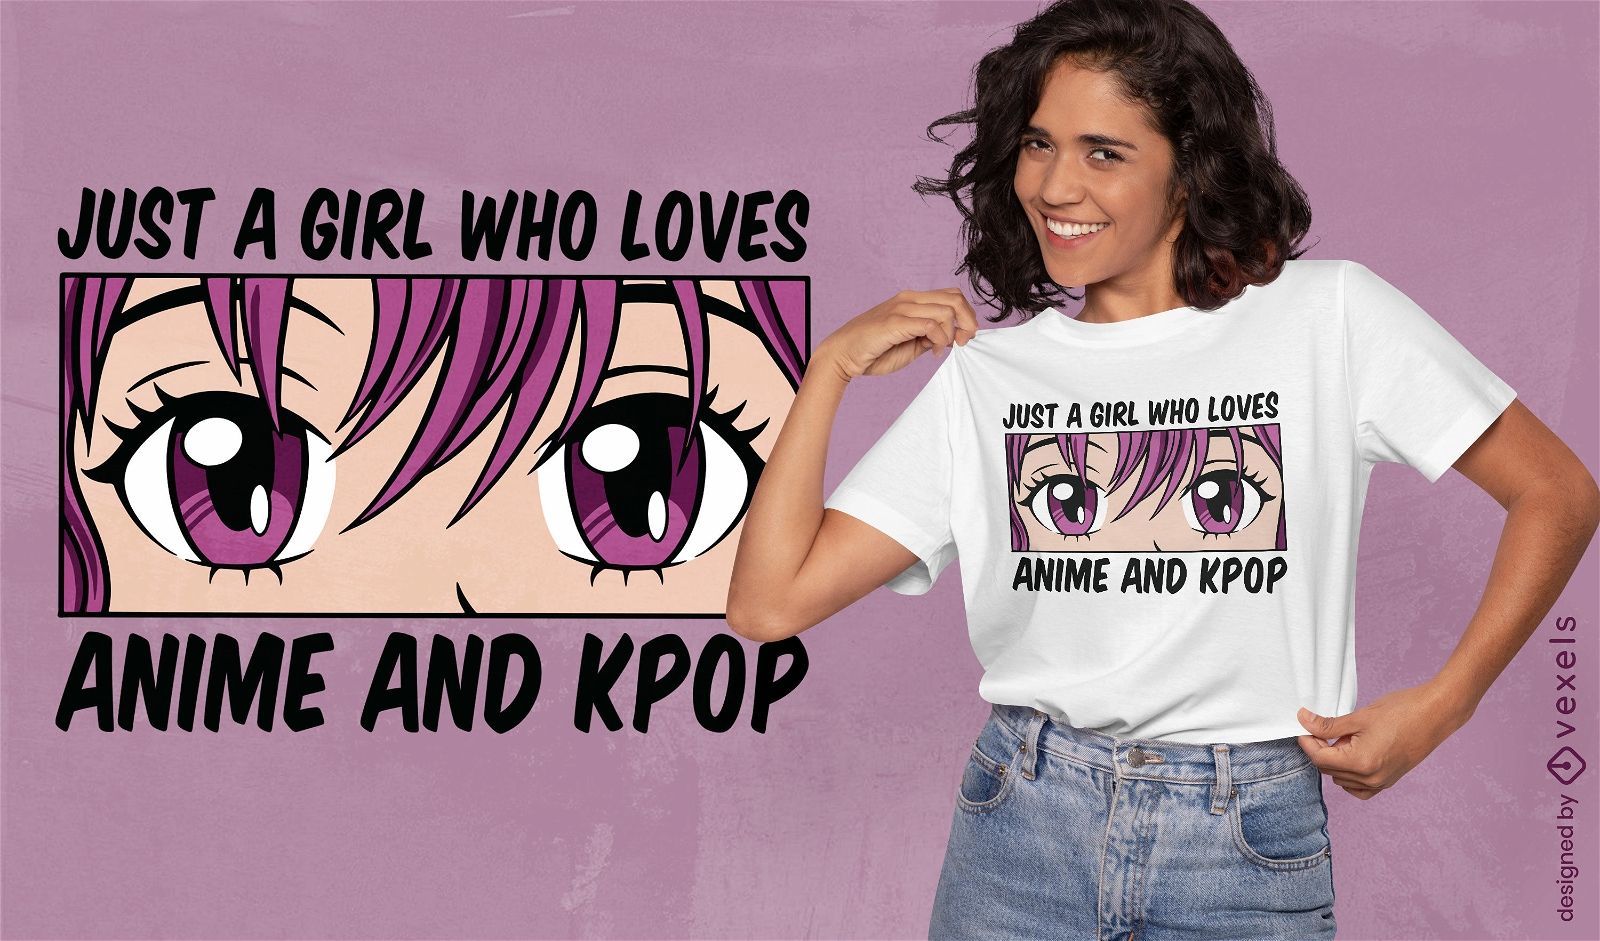 Kpop anime fan t-shirt design